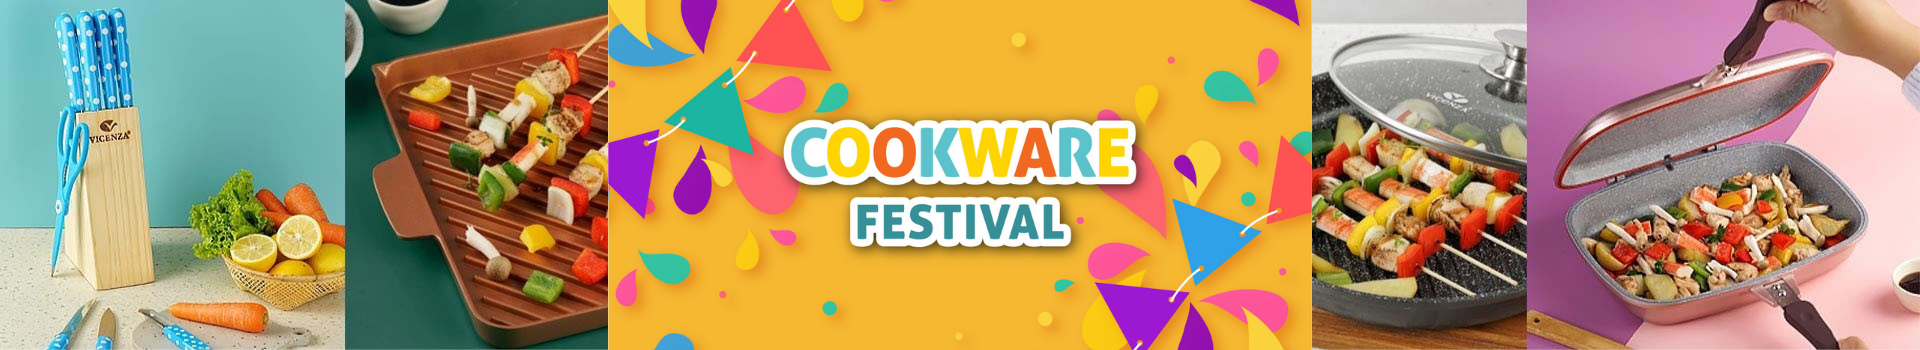 Cookware Festival